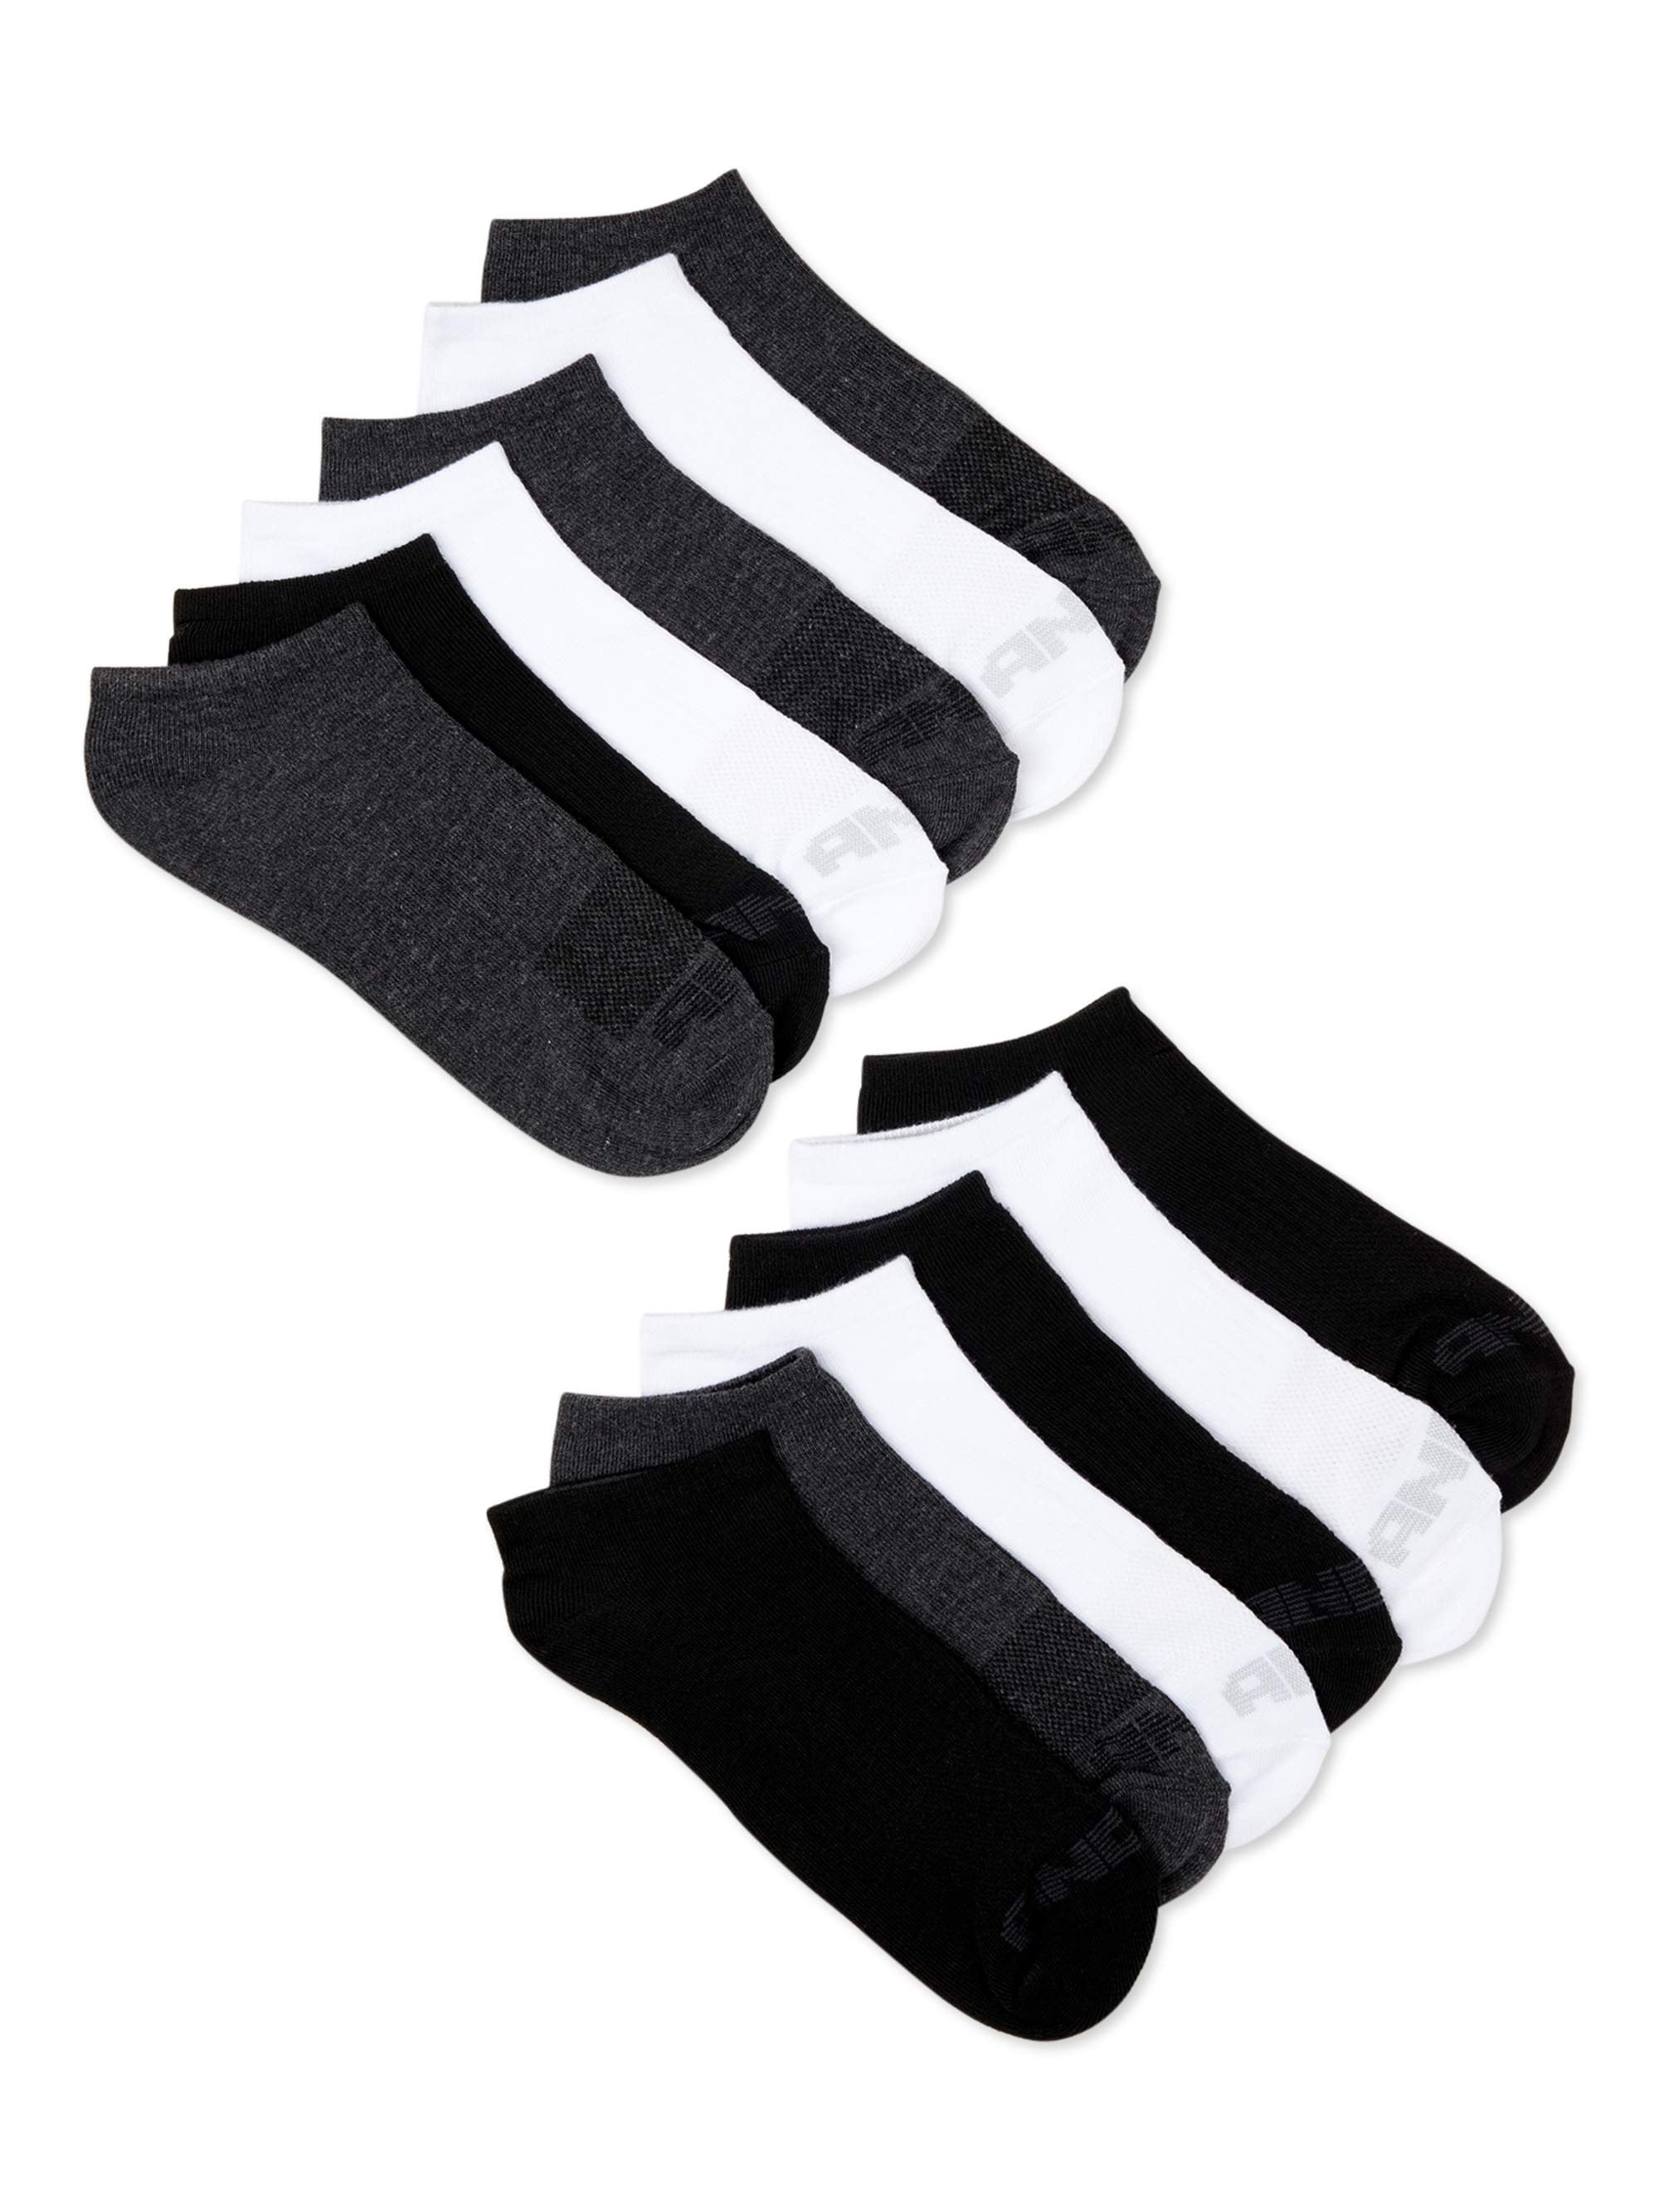 AND1 Men's Lightweight Liner Sock, 12 Pack - Walmart.com